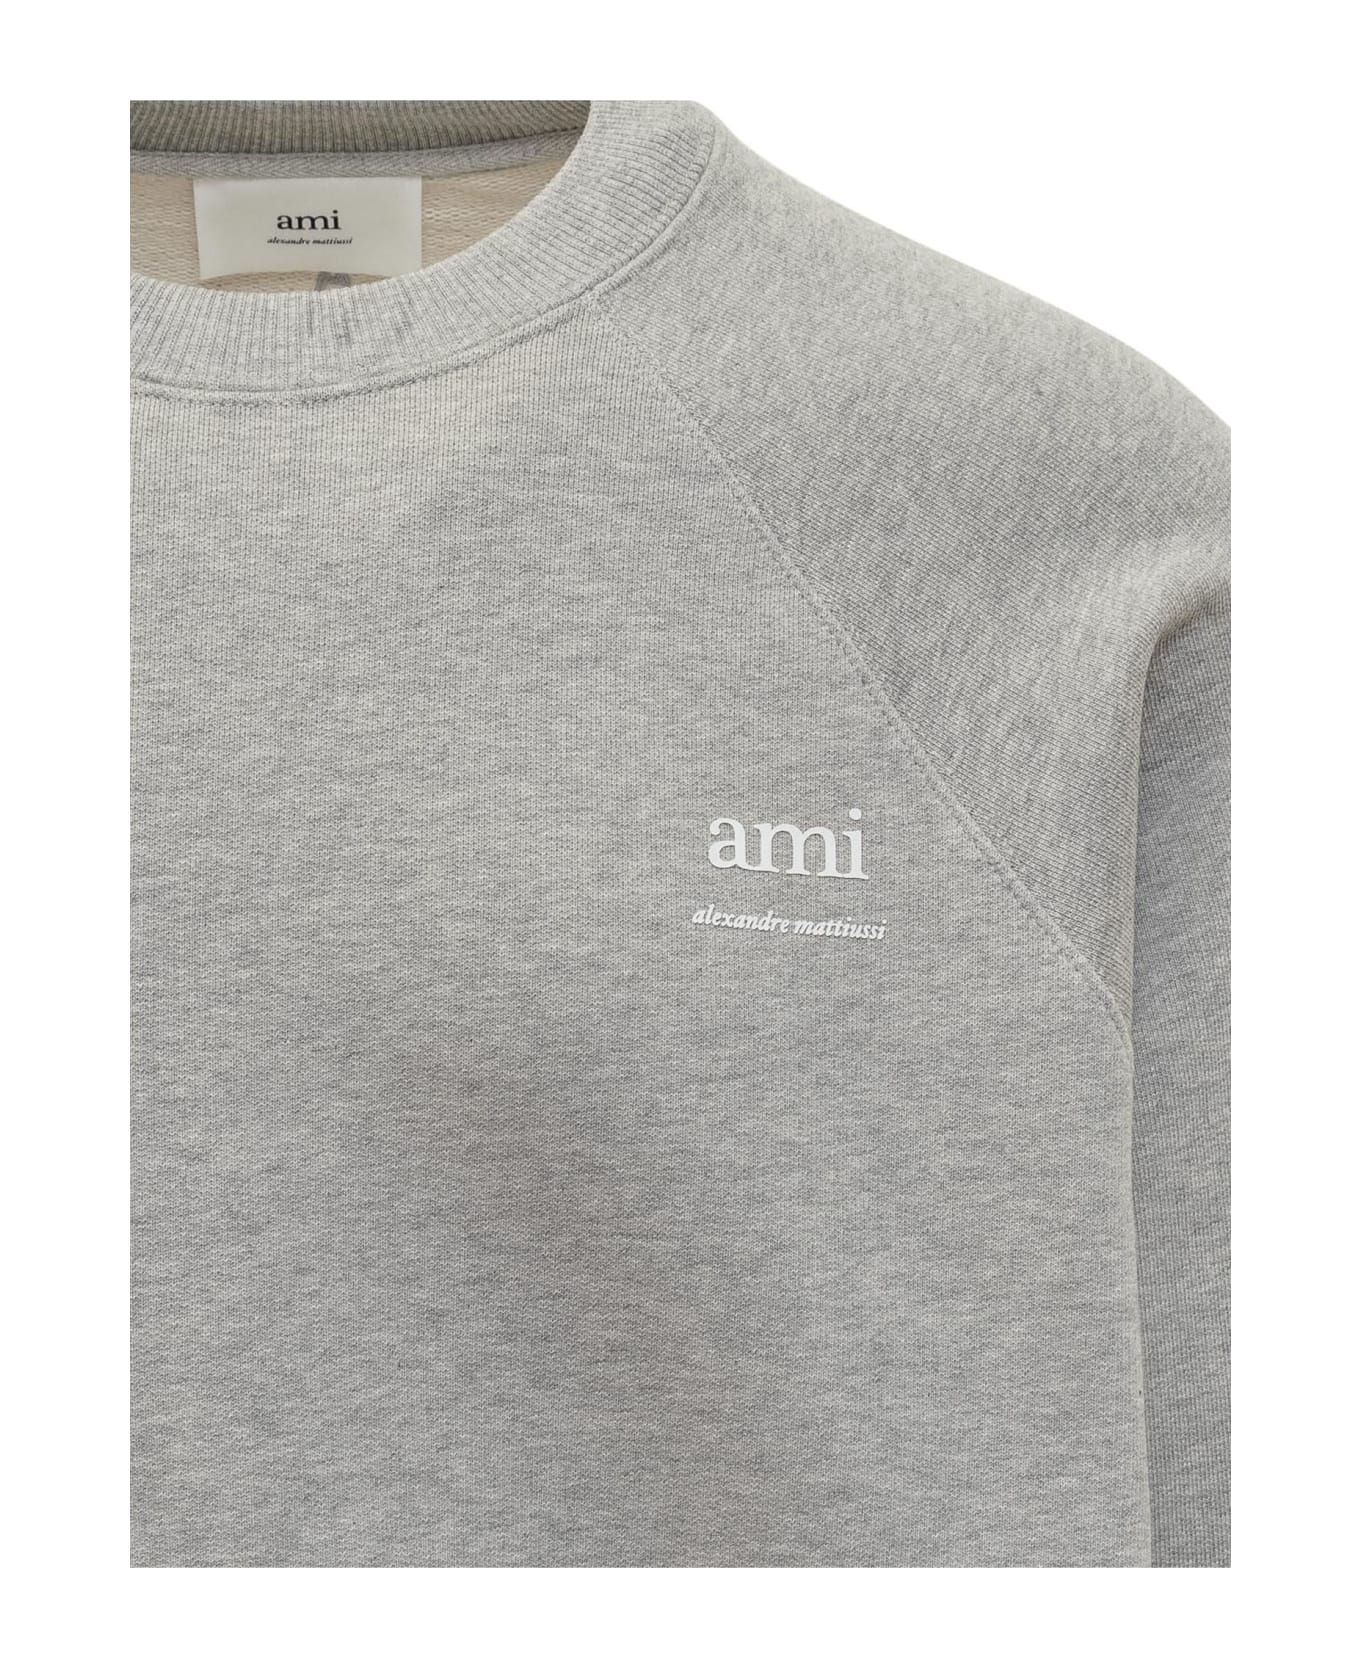 Ami Alexandre Mattiussi Sweatshirt With Logo - HEATHER ASH GREY